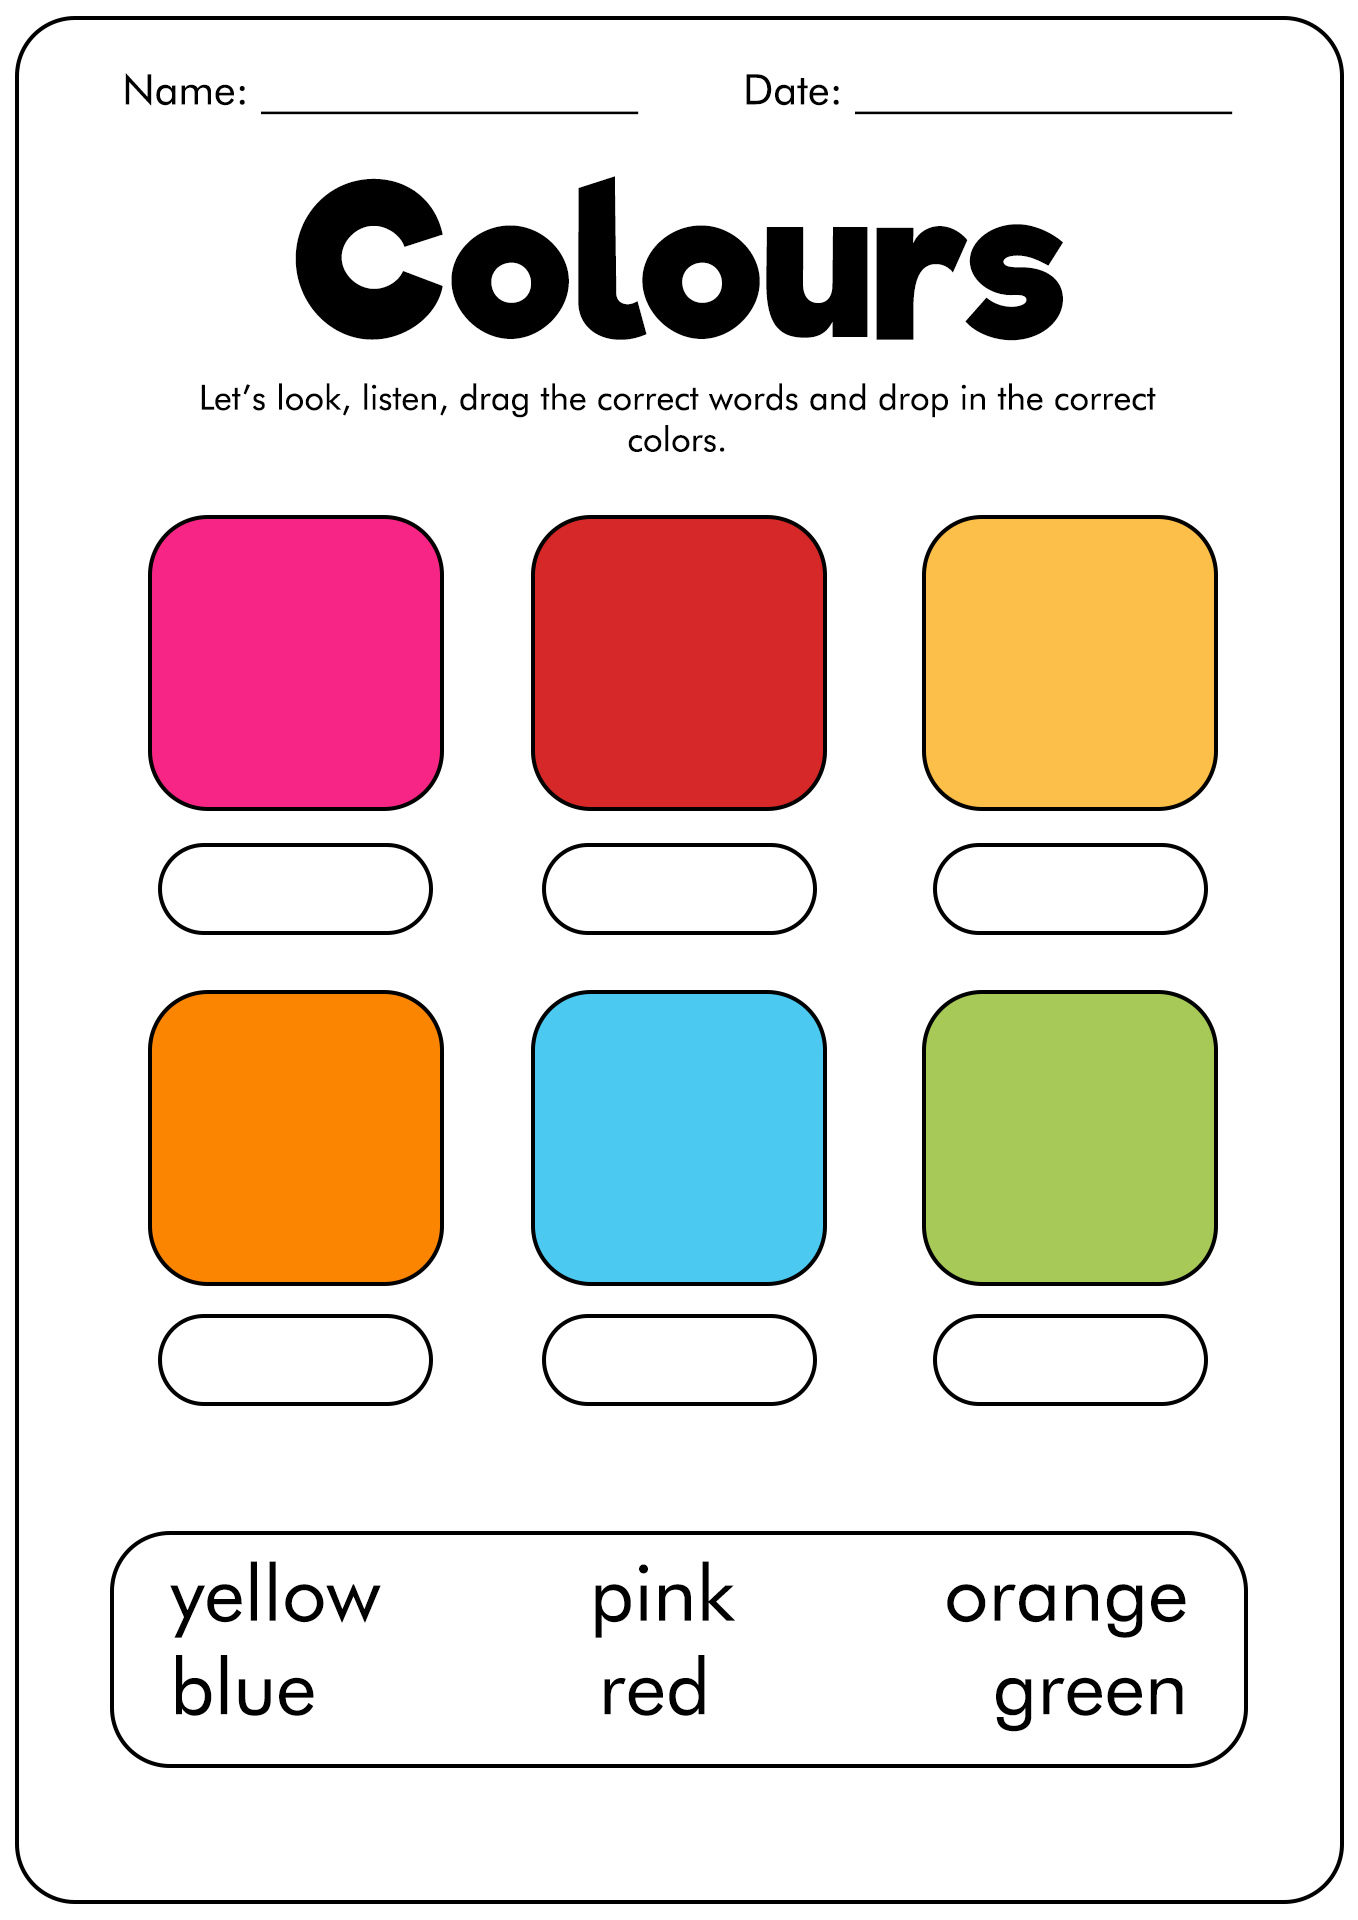 Colours for Kids Worksheets Image